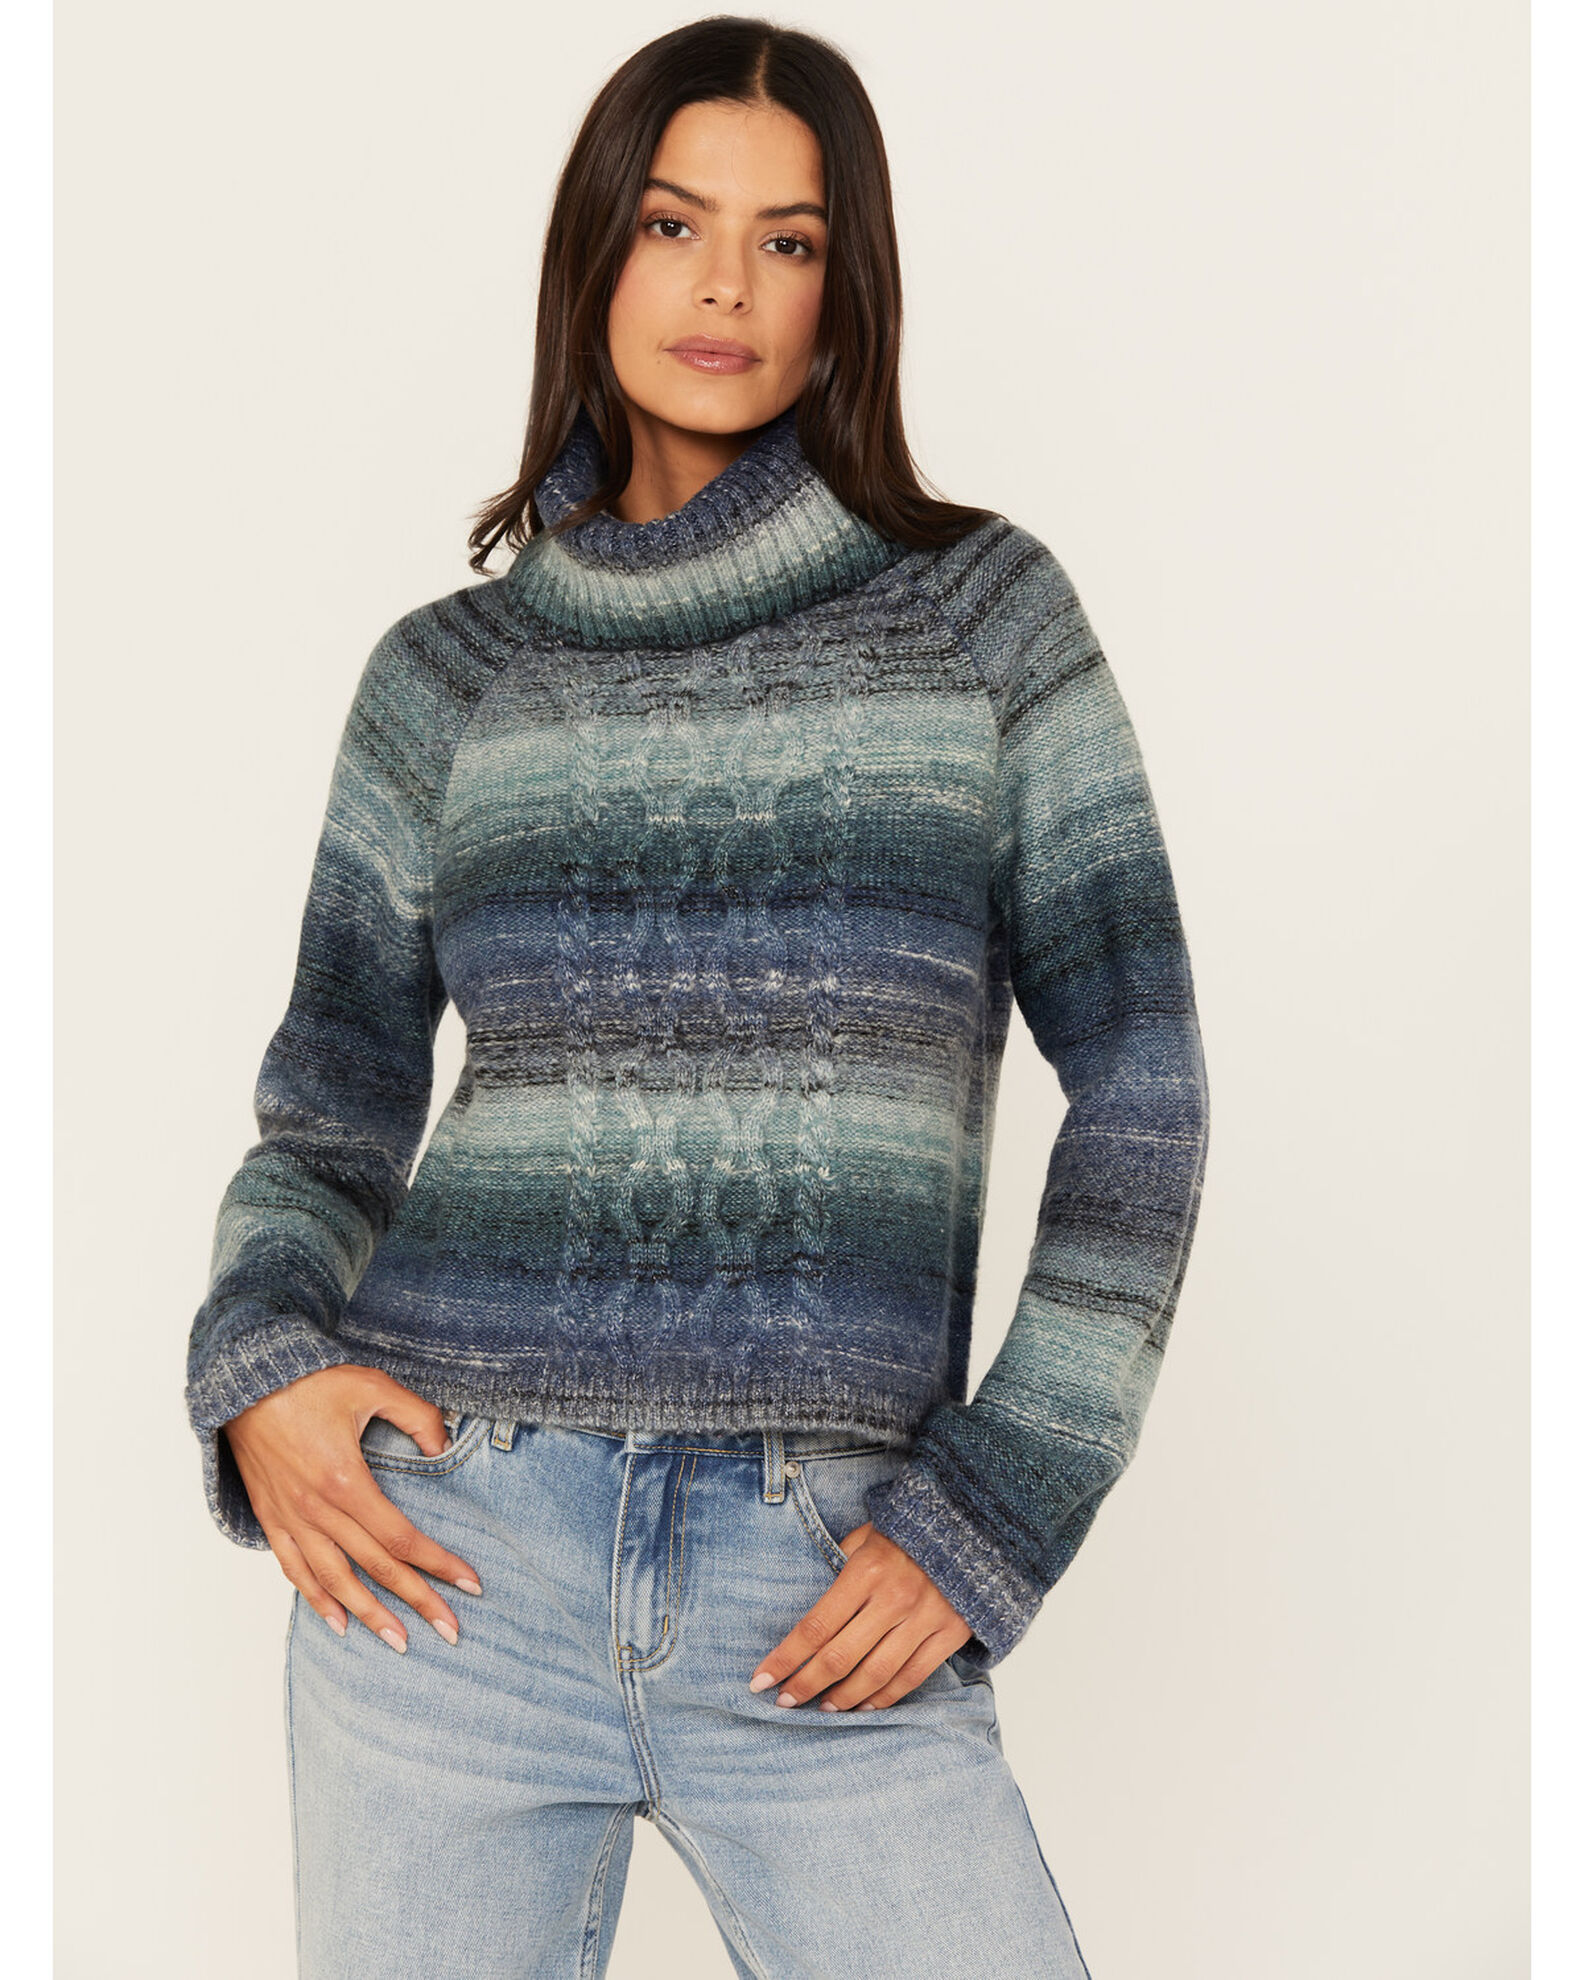 Cleo + Wolf Women's Turtle Neck Sweater